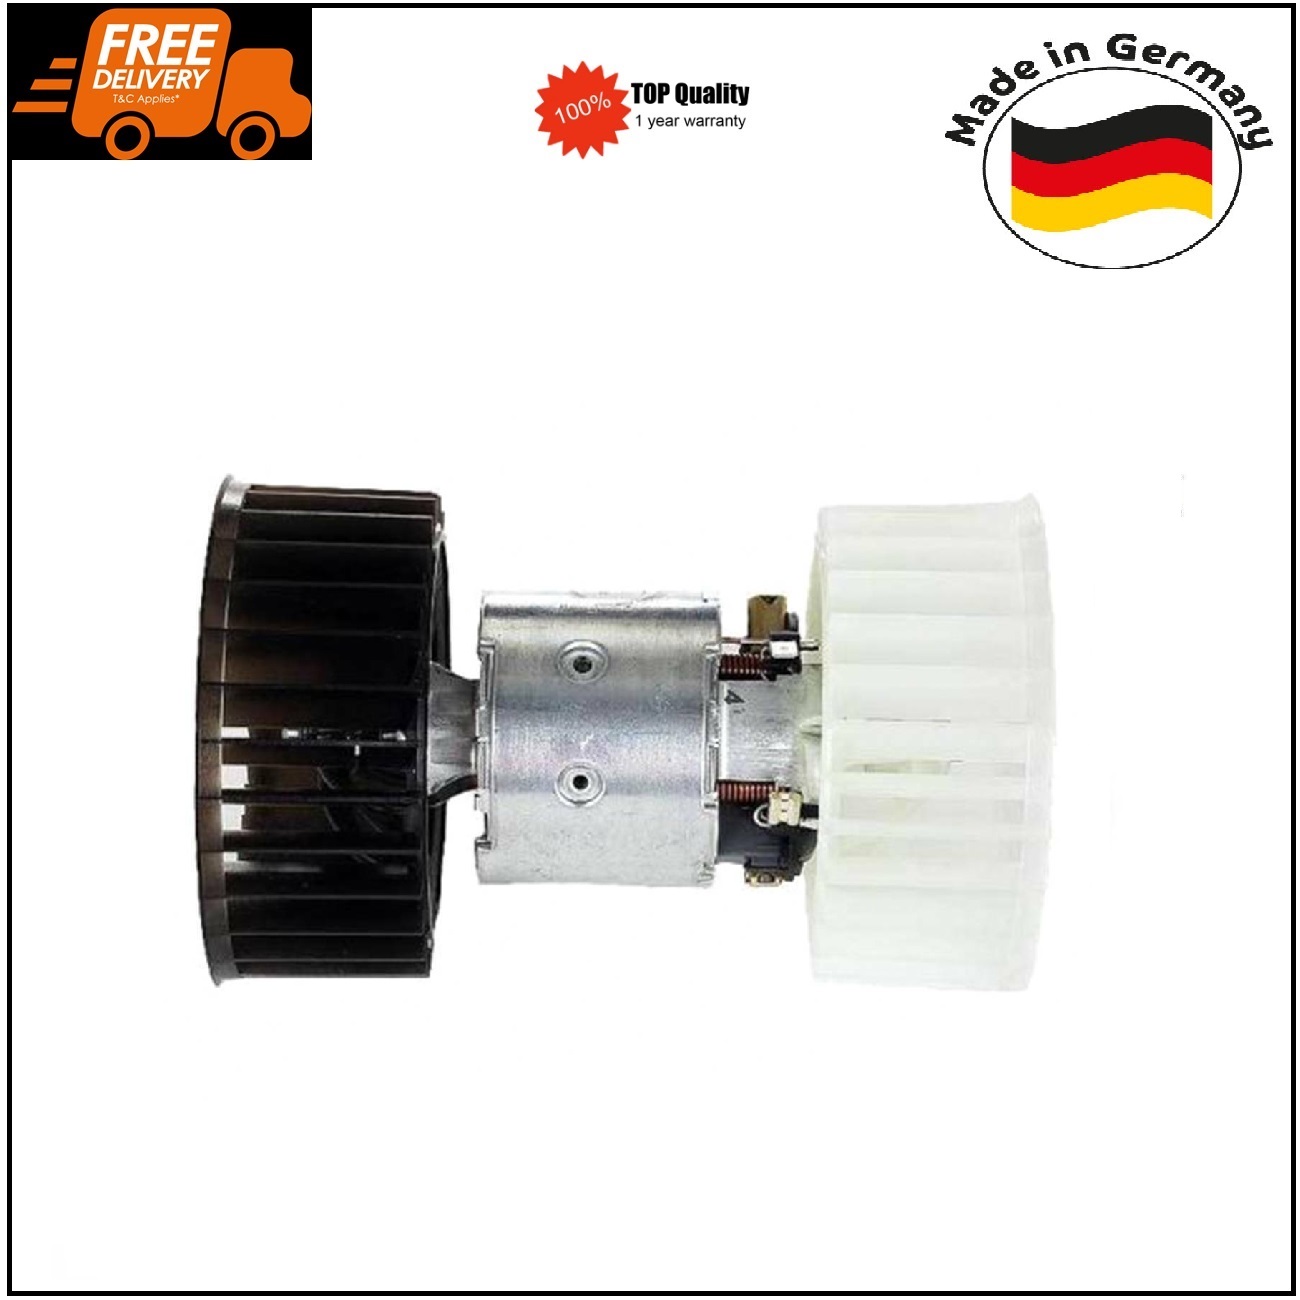 A/C Heater Blower Motor for BMW E30 E36 316i 318i 320i 323i 325i Z3 64111370930 German Made